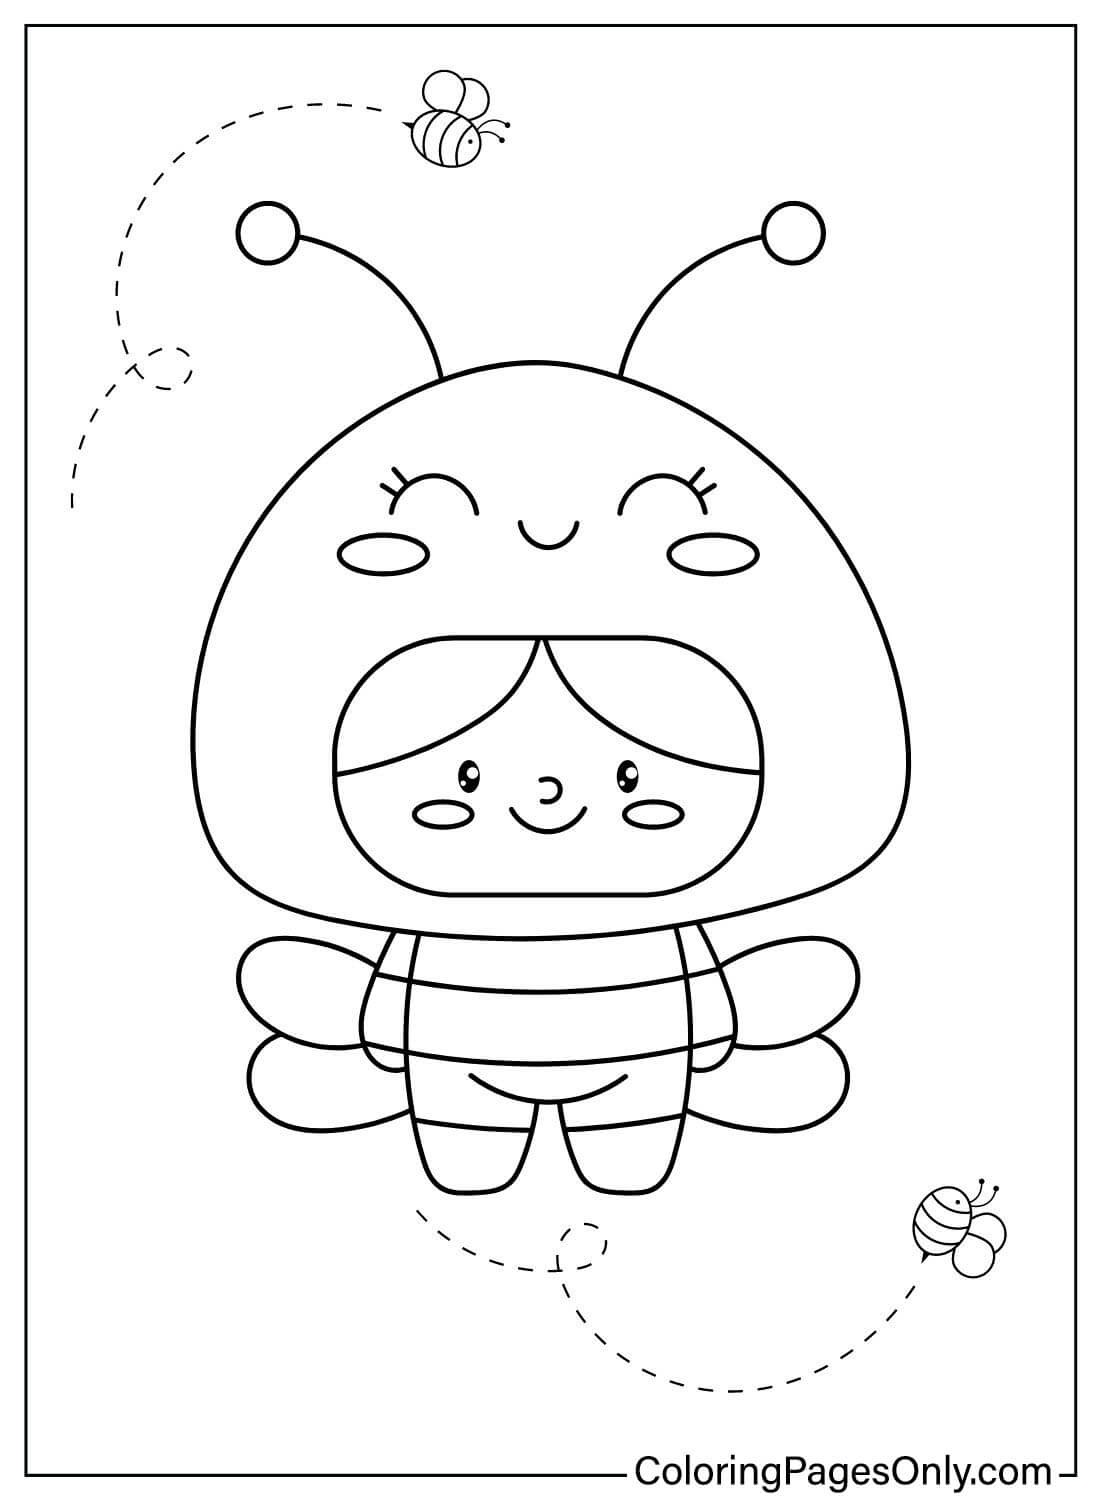 Página para colorir de fantasia infantil de abelha da Bee